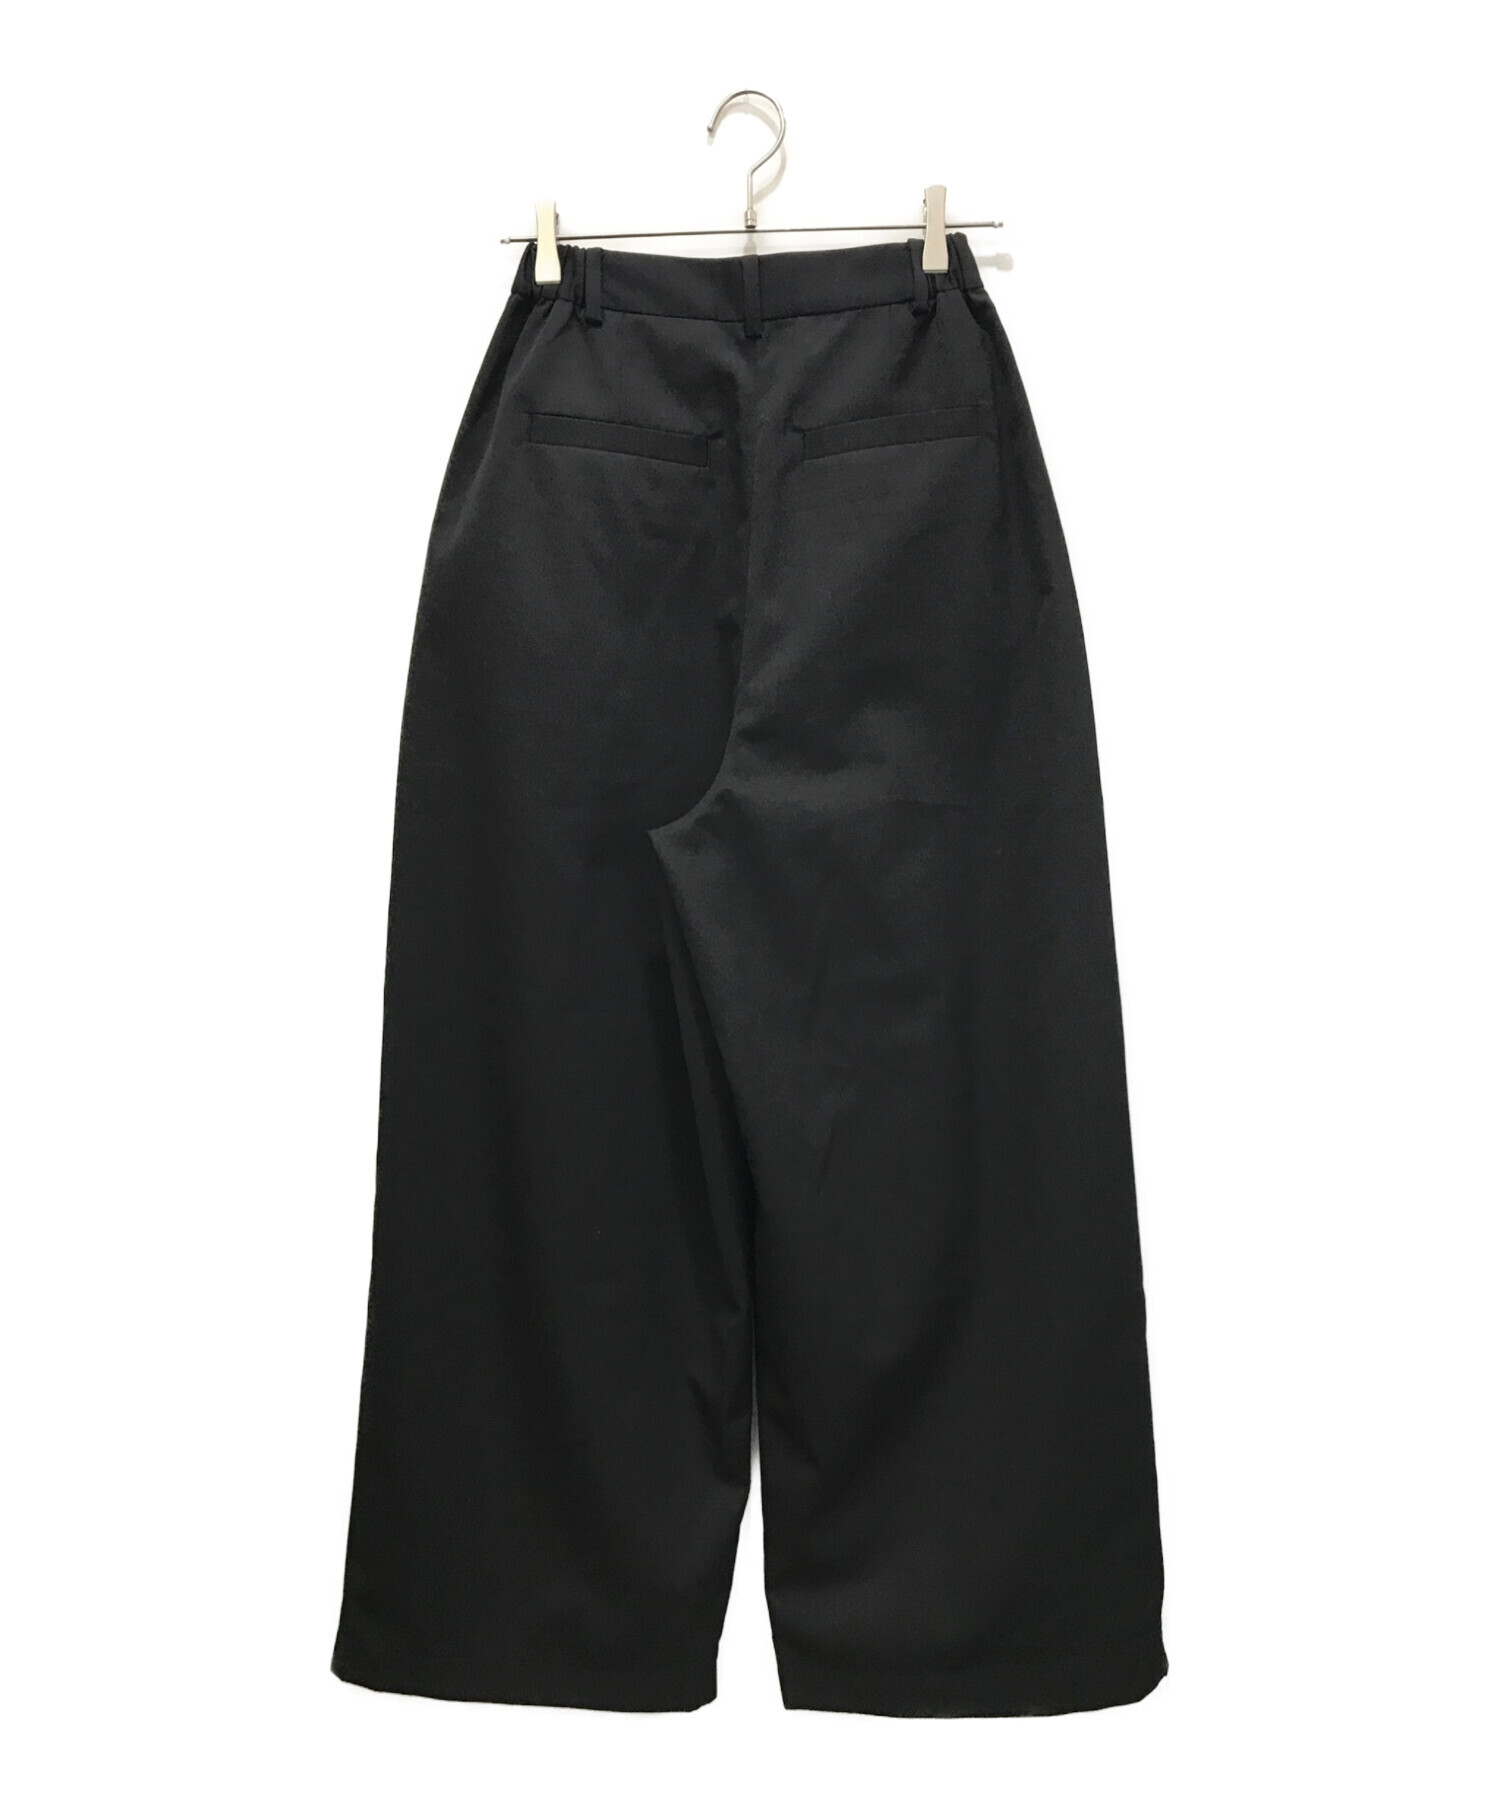 Nala High waist wide pants Mサイズ28000円はいかがでしょうか